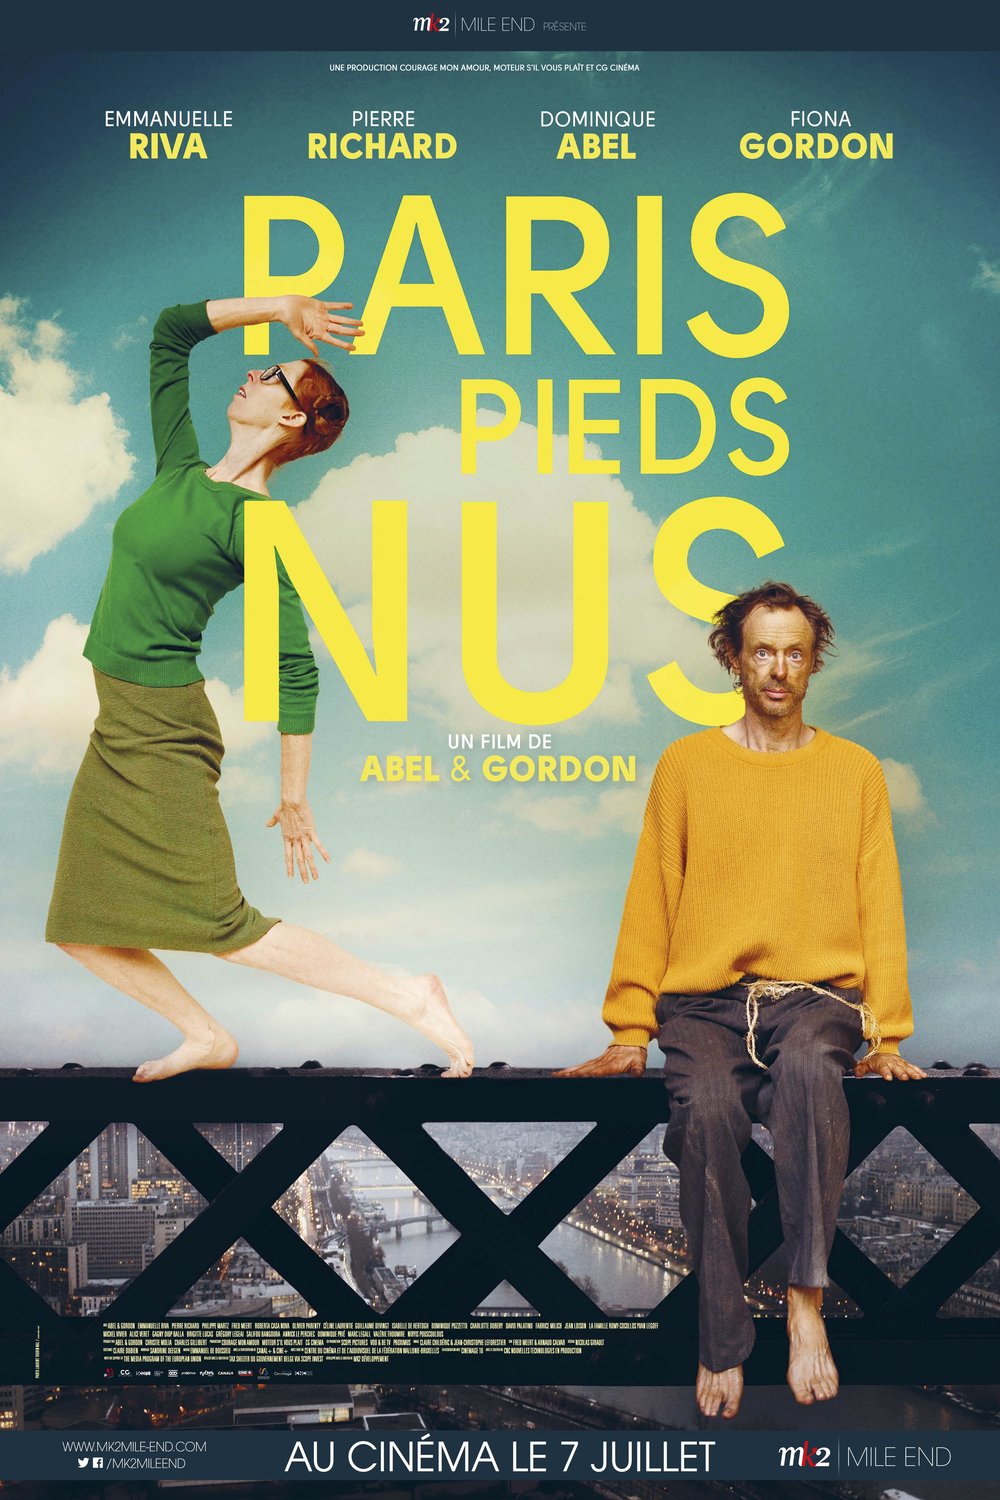 L'affiche du film Paris pieds nus